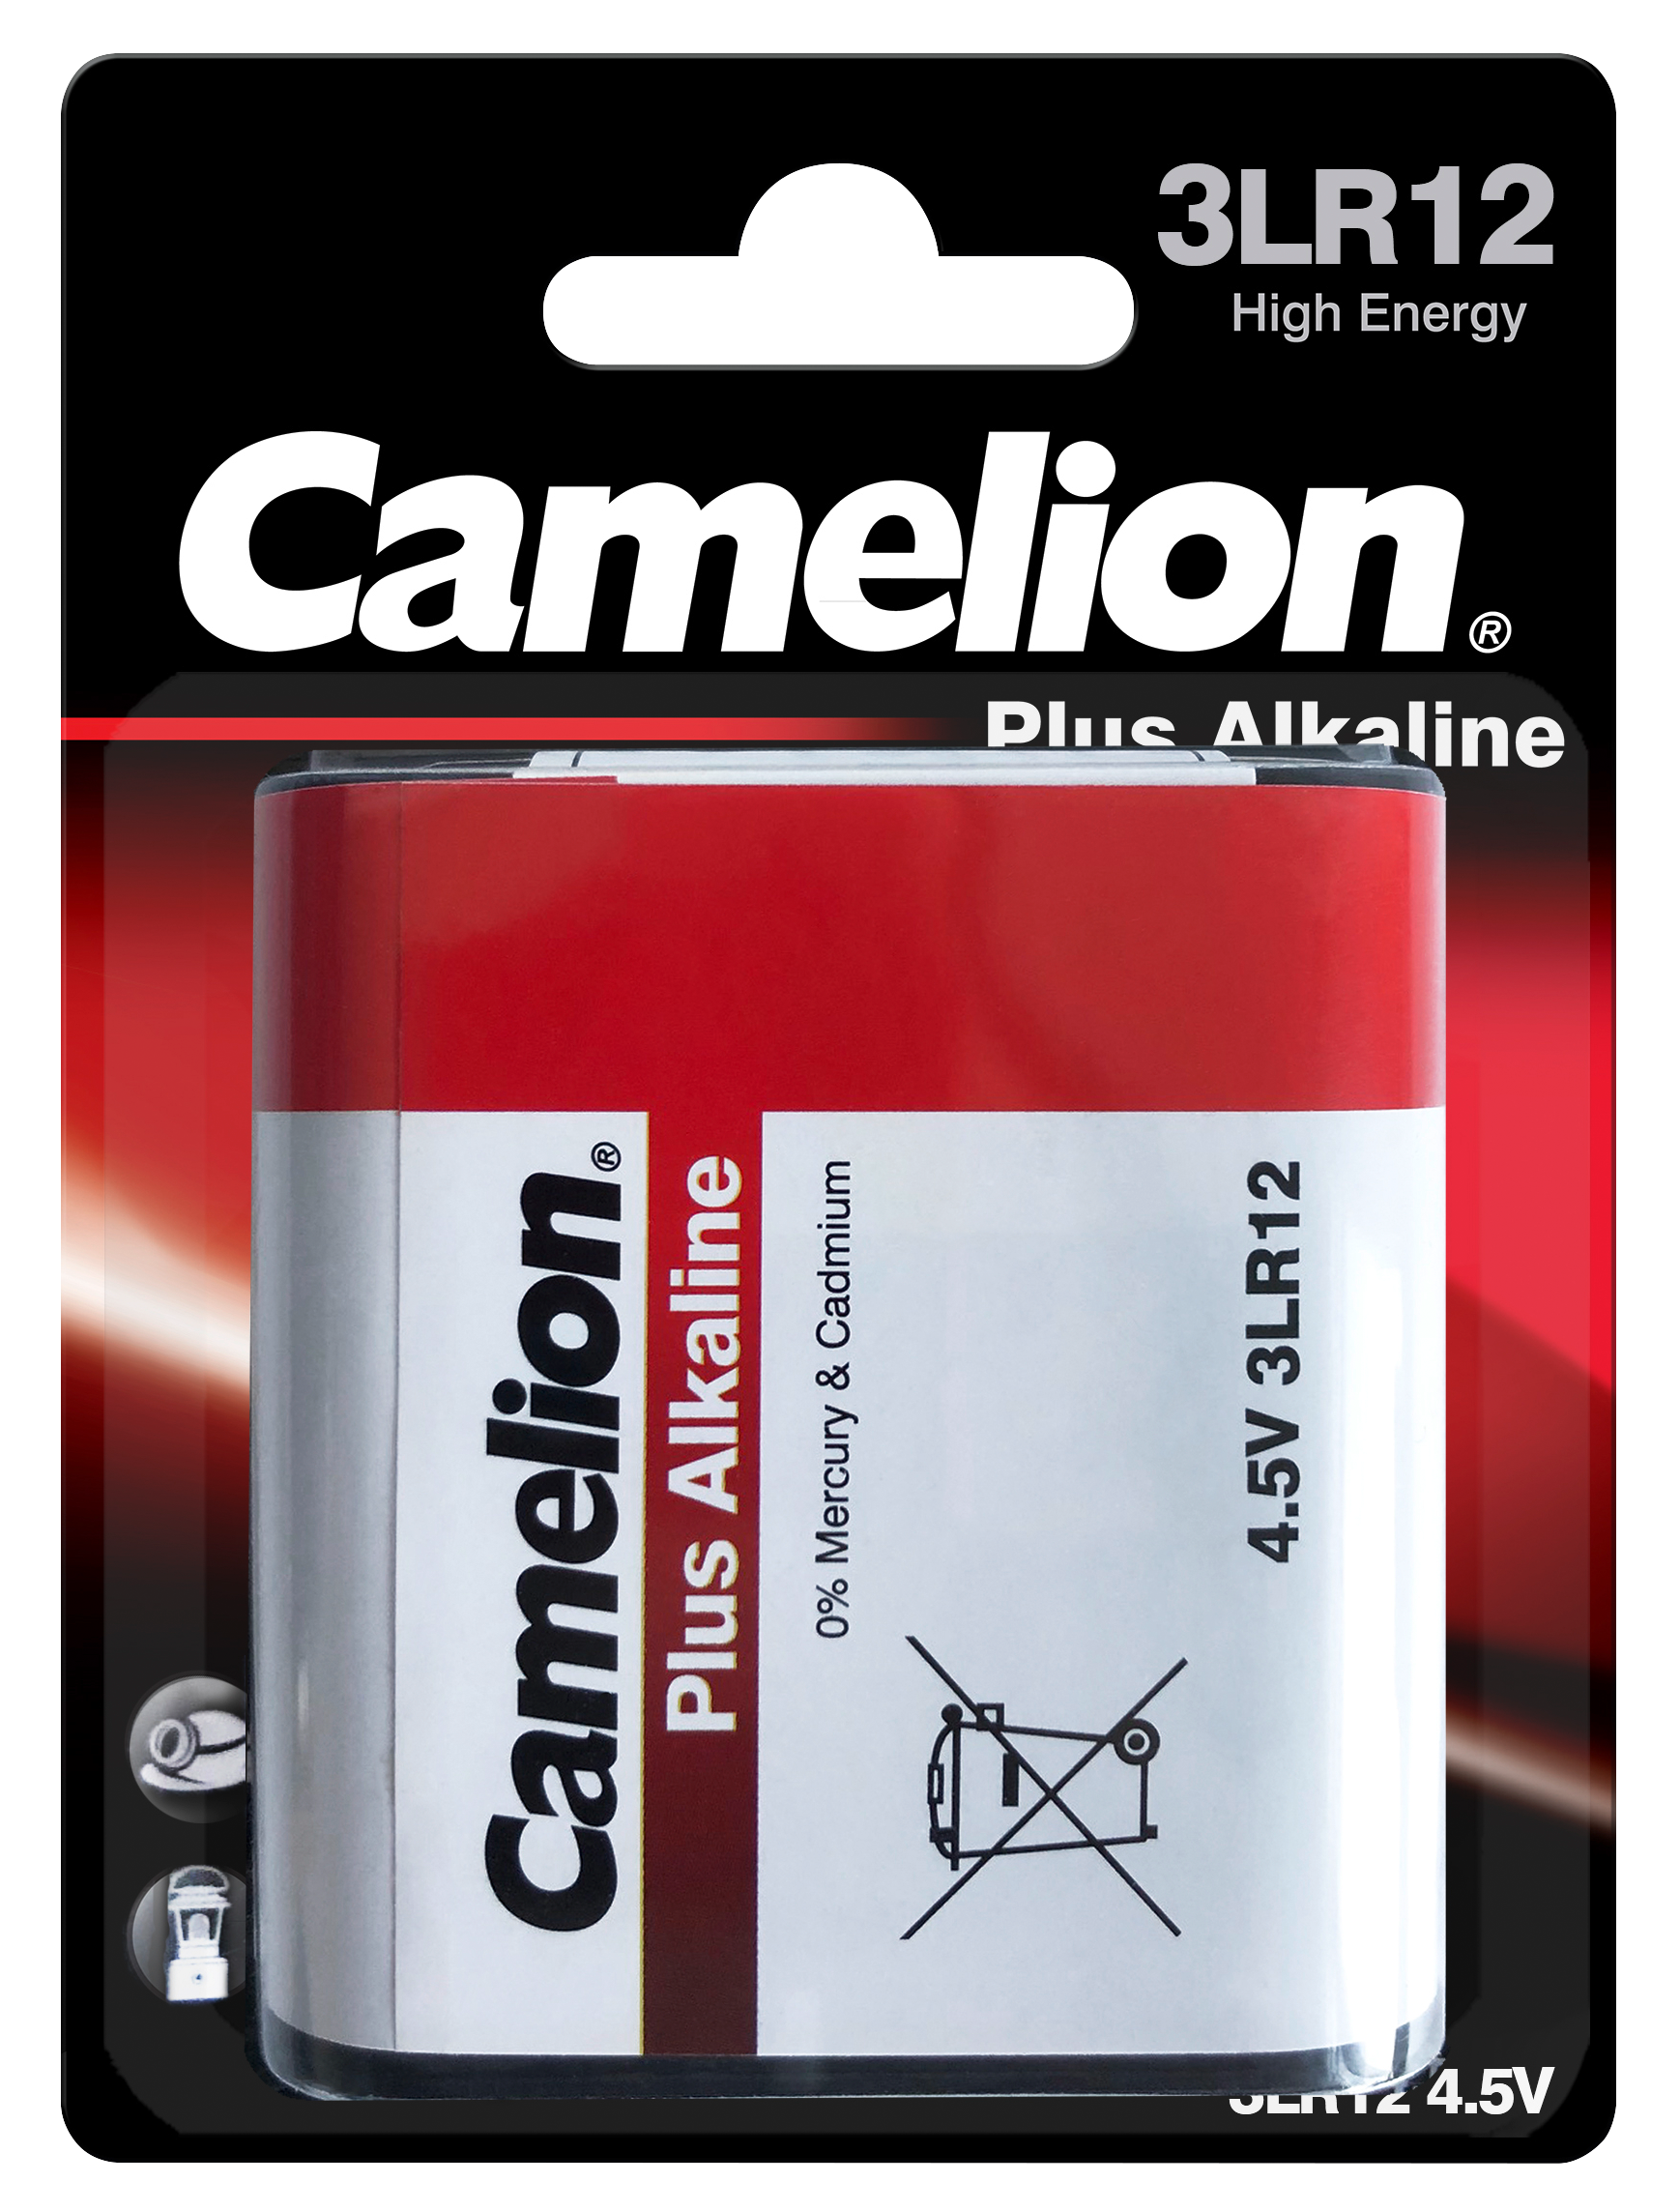 Flachbatterie CAMELION Plus Alkaline 4,5 V, Typ 3LR12